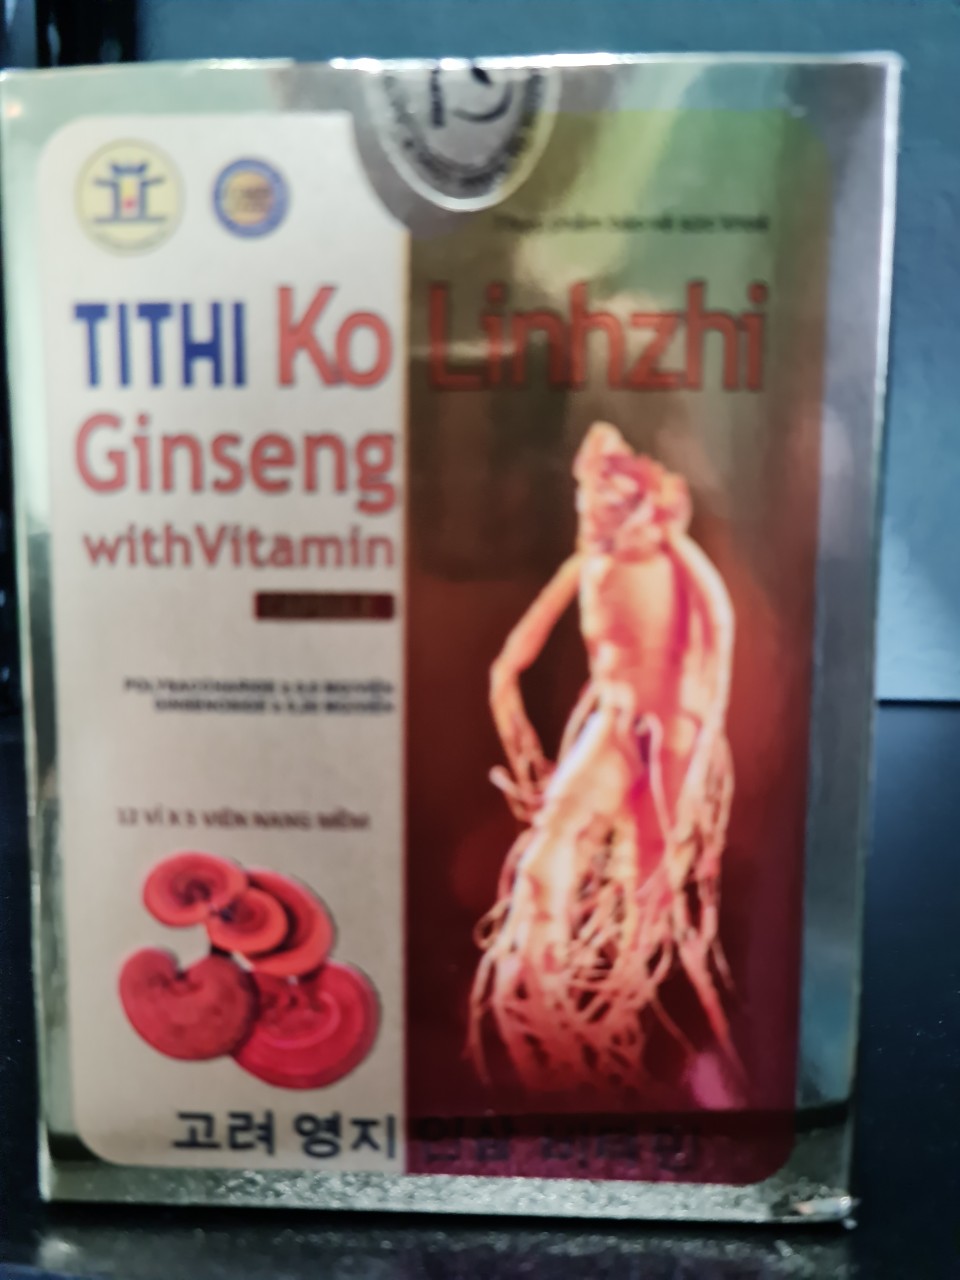 TiThi Ko Linhzhi Ginseng 